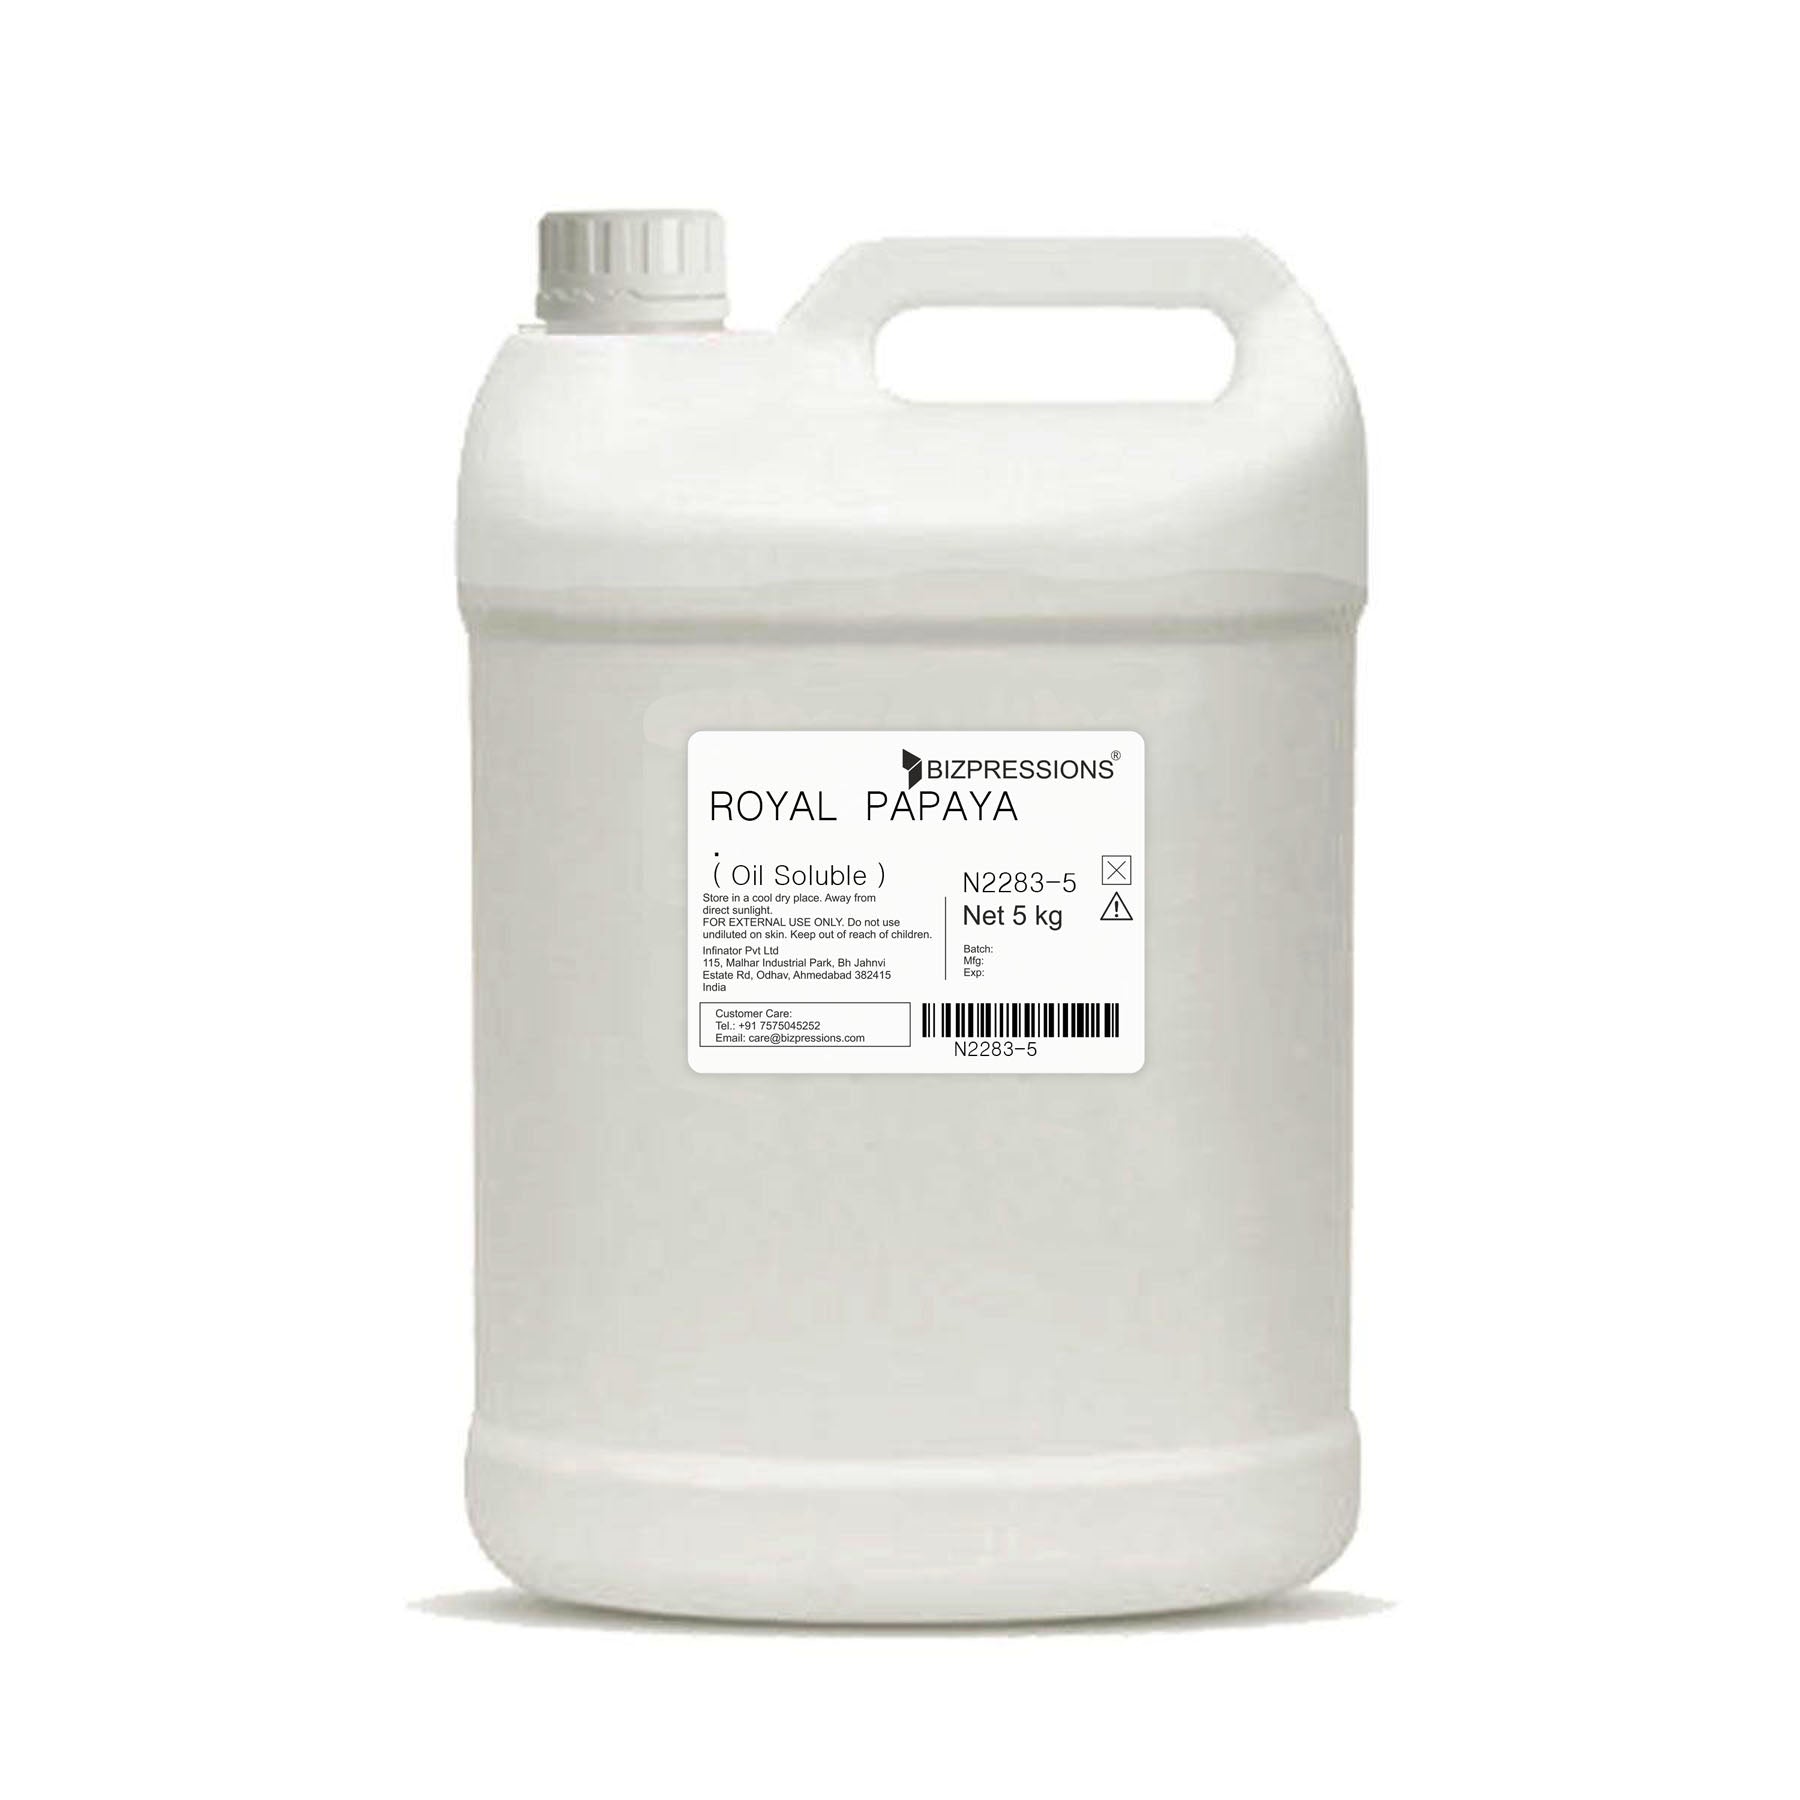 ROYAL PAPAYA - Fragrance ( Oil Soluble ) - 5 kg